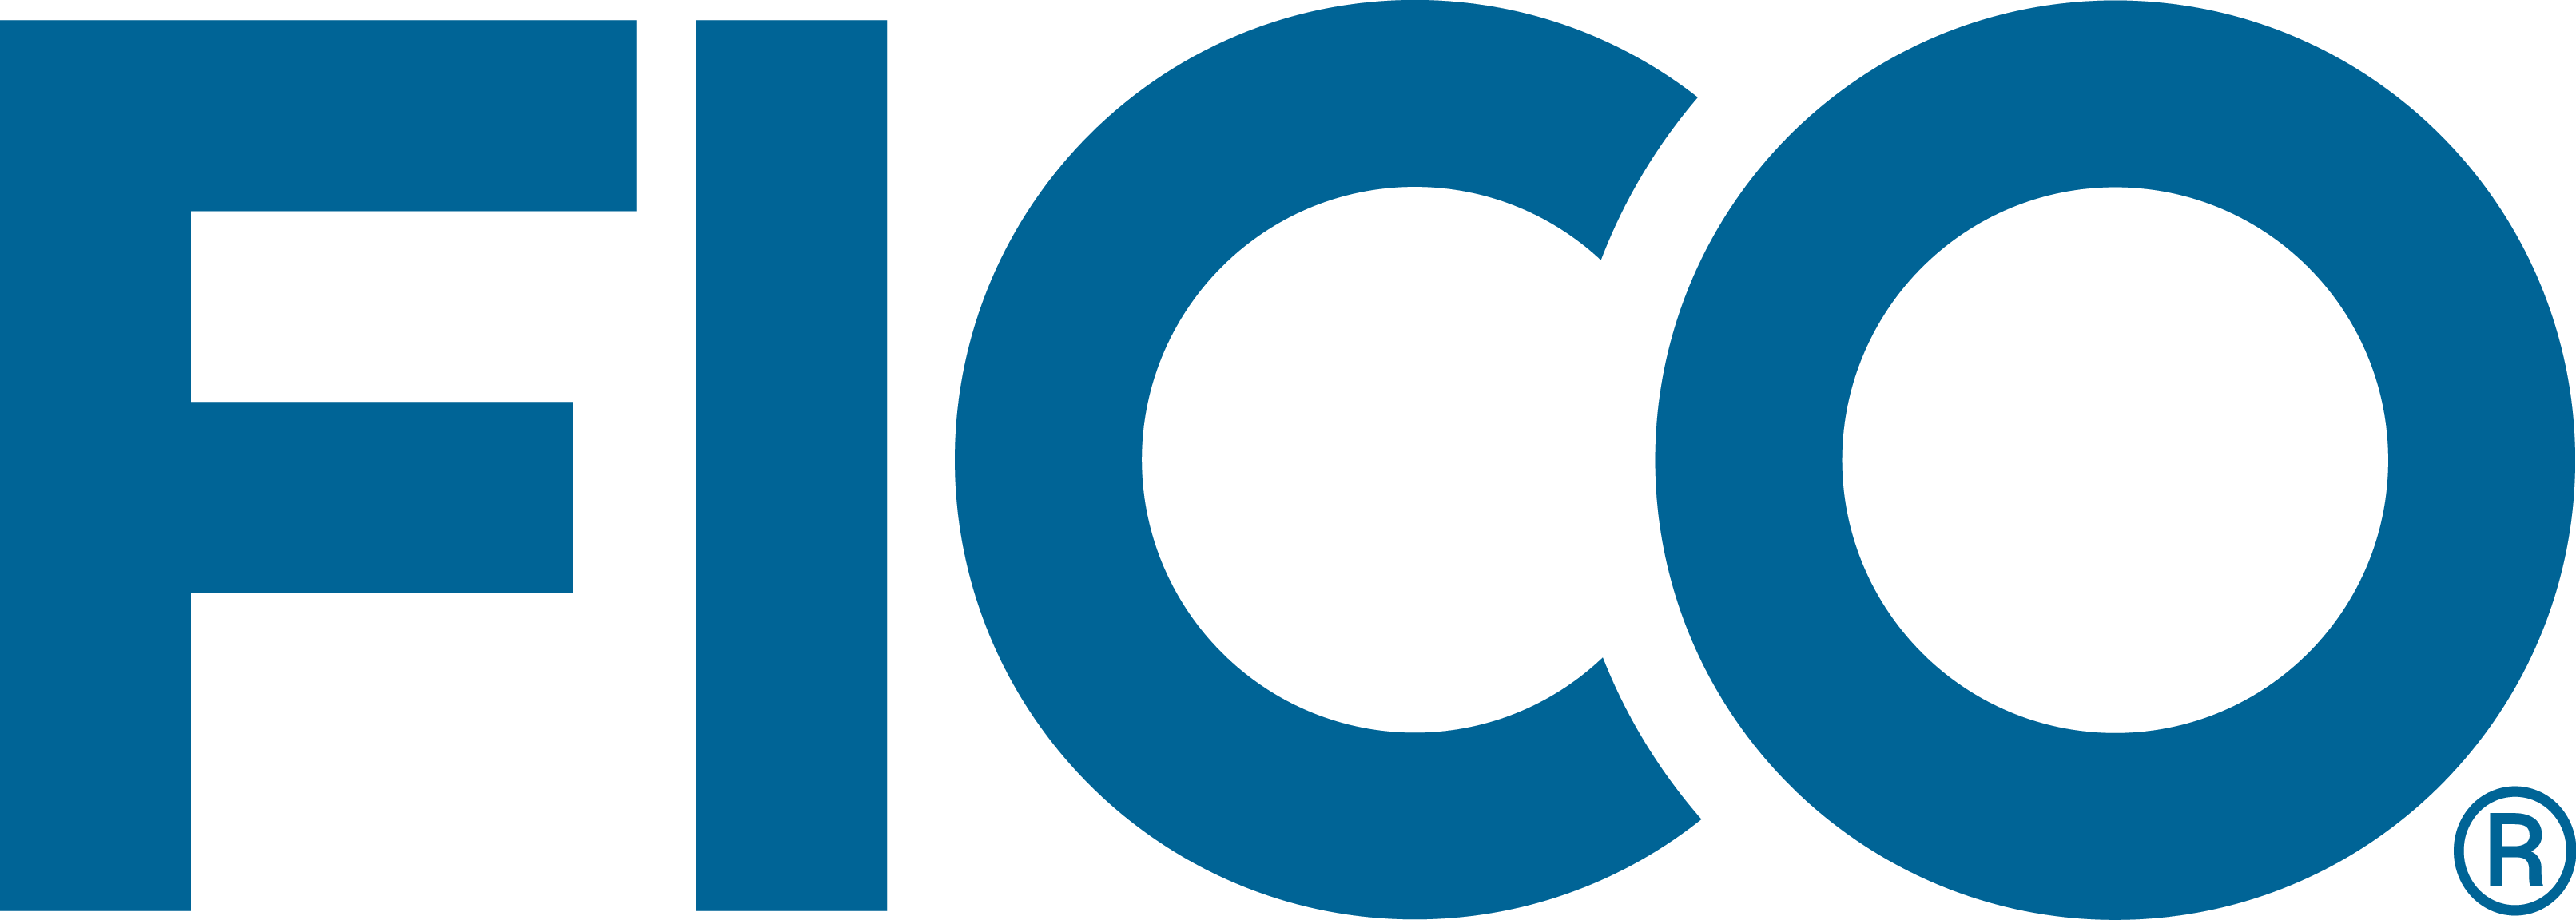 FICO Logo png